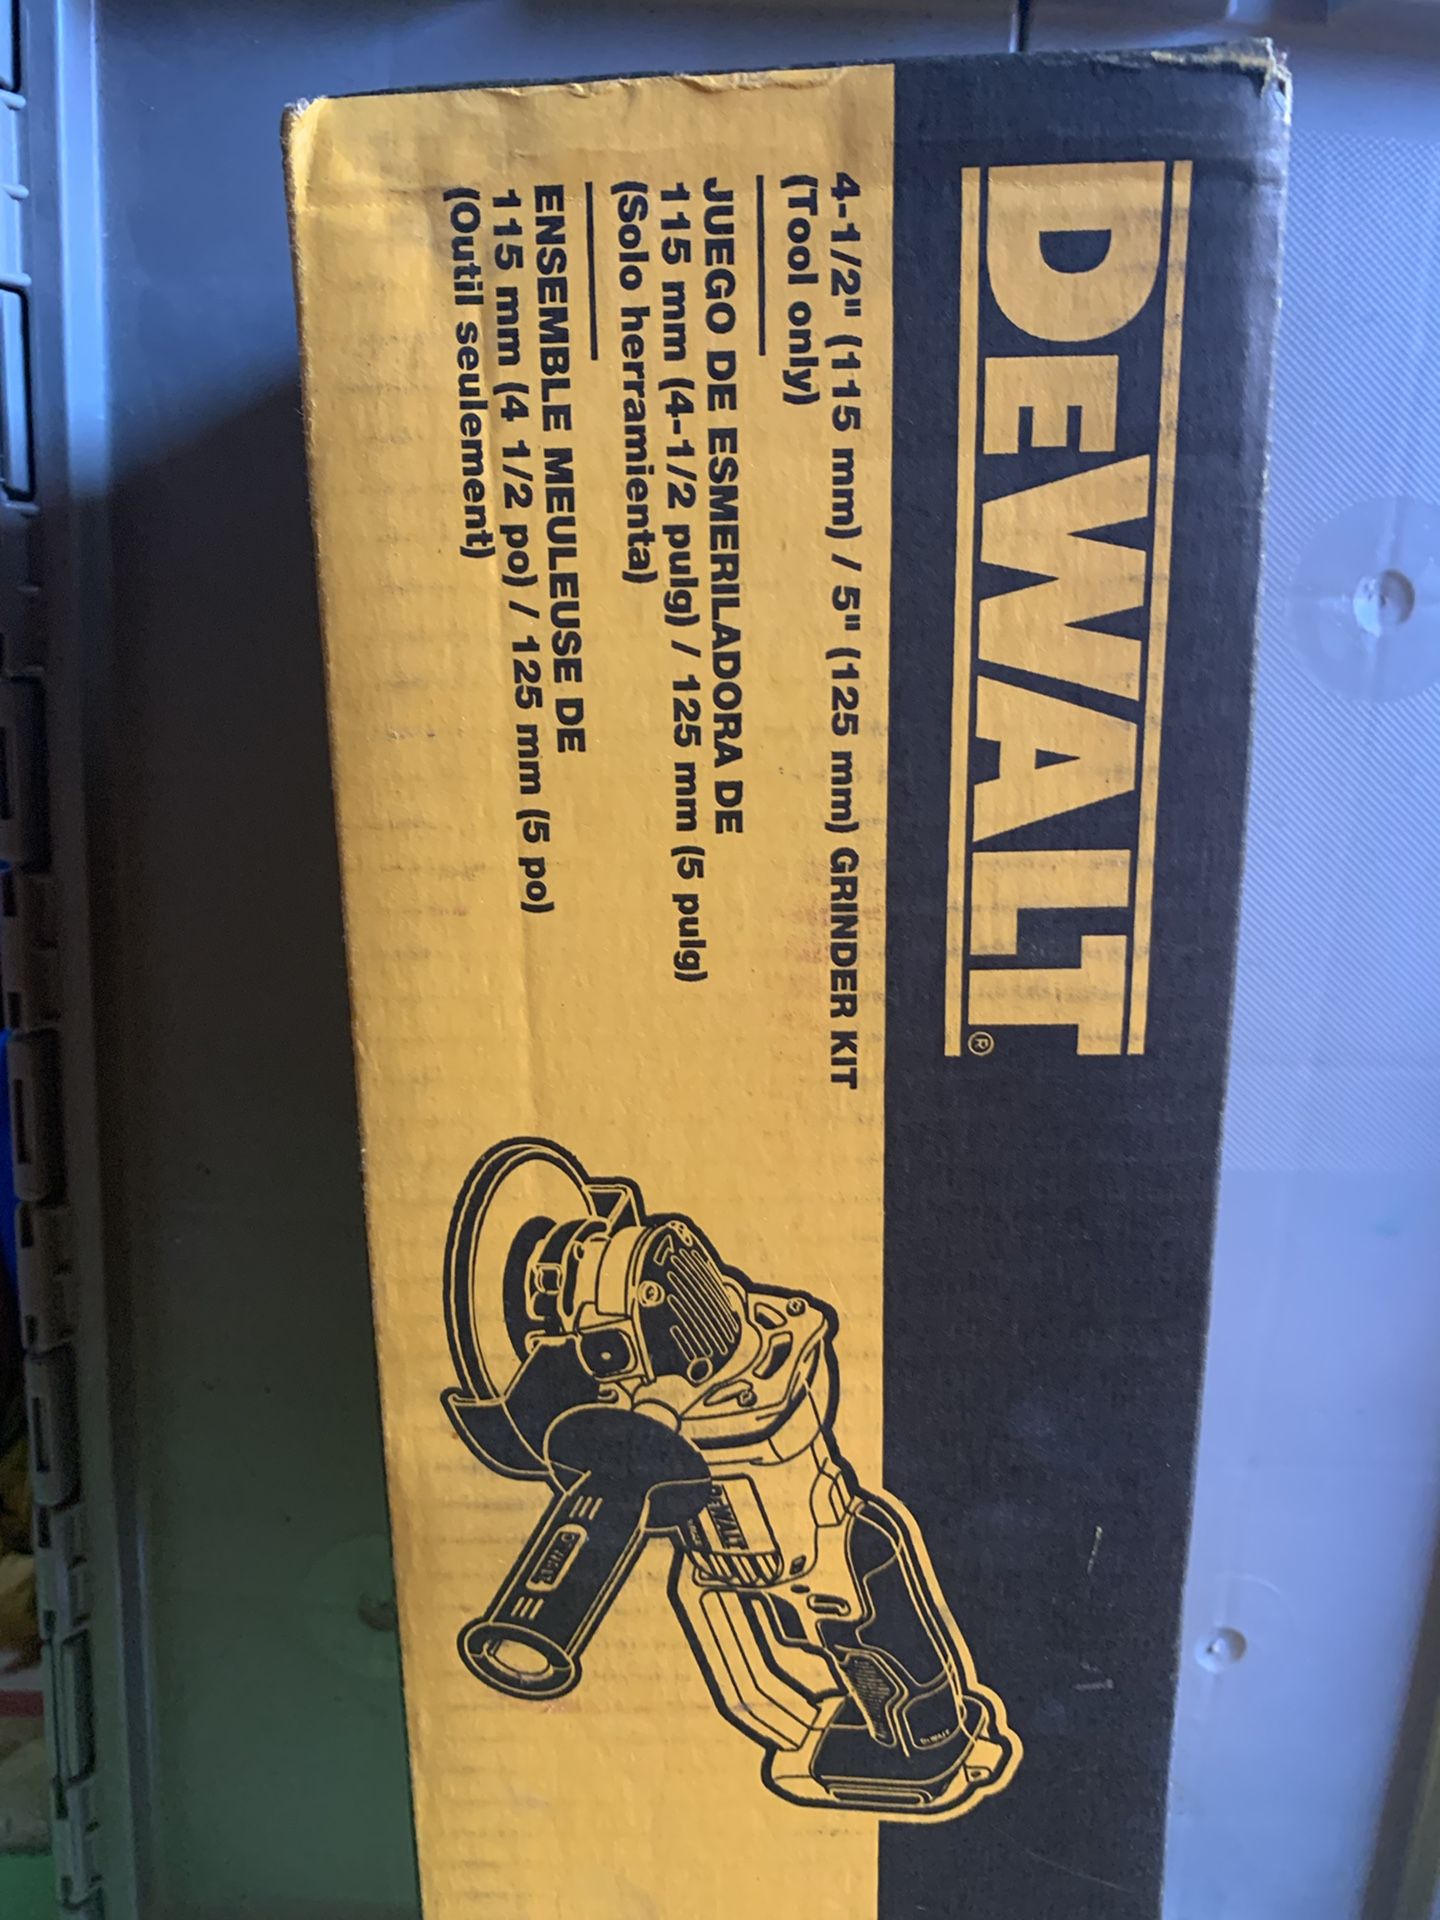 Dewalt Grinder New in Box. Tool Only $75